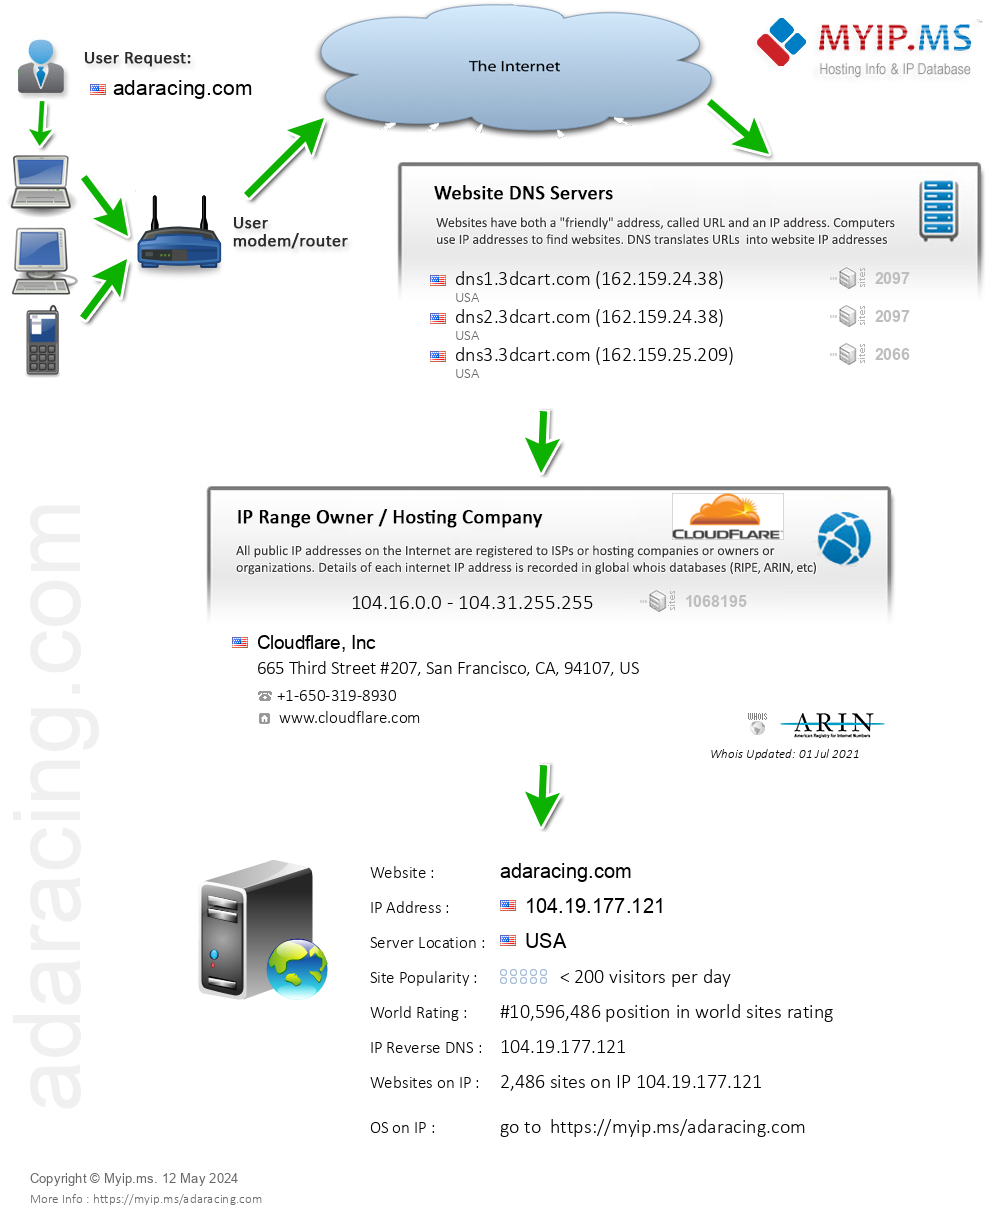 Adaracing.com - Website Hosting Visual IP Diagram